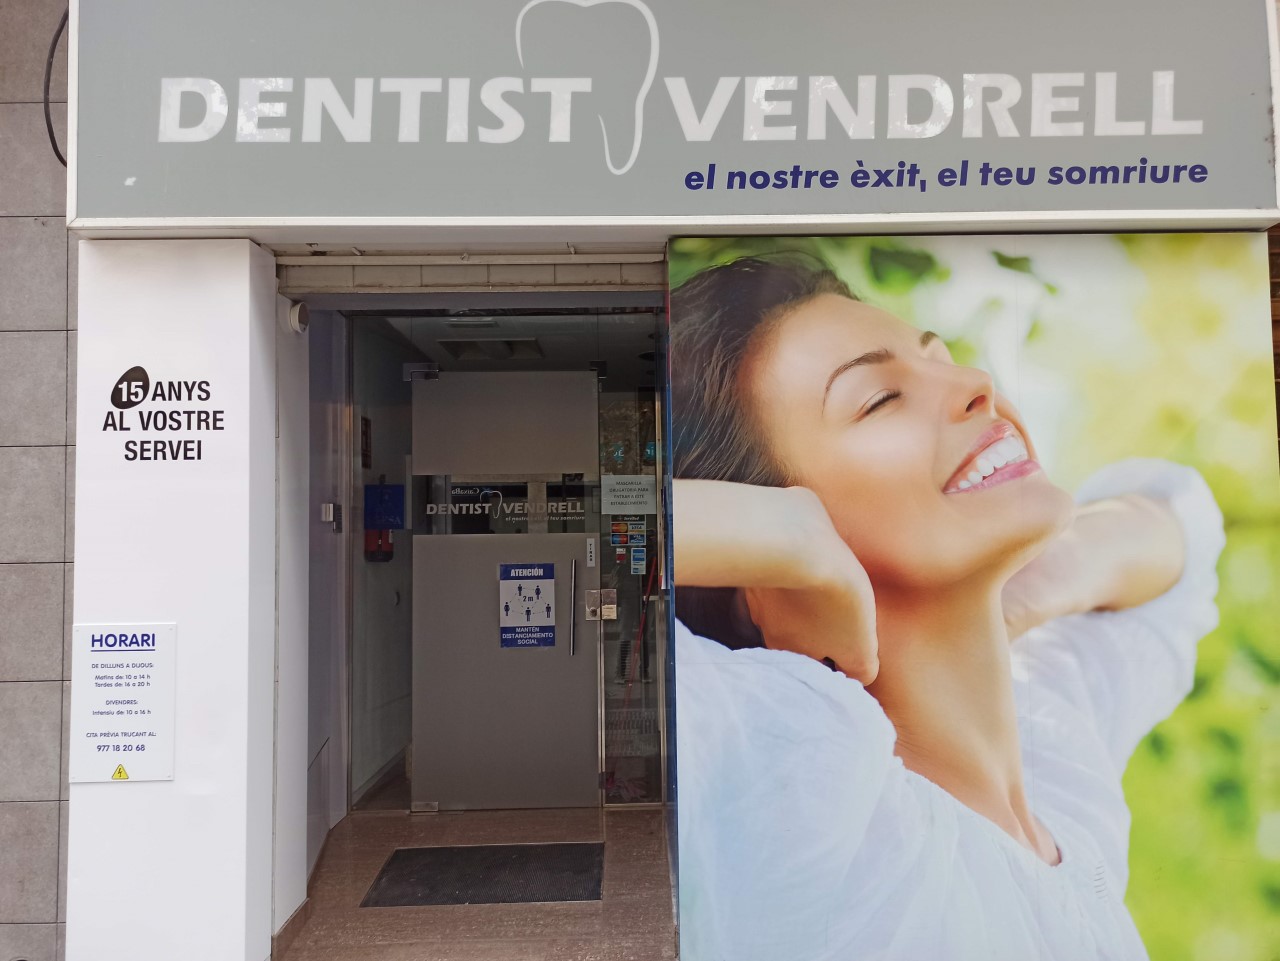 Images Dentist Vendrell